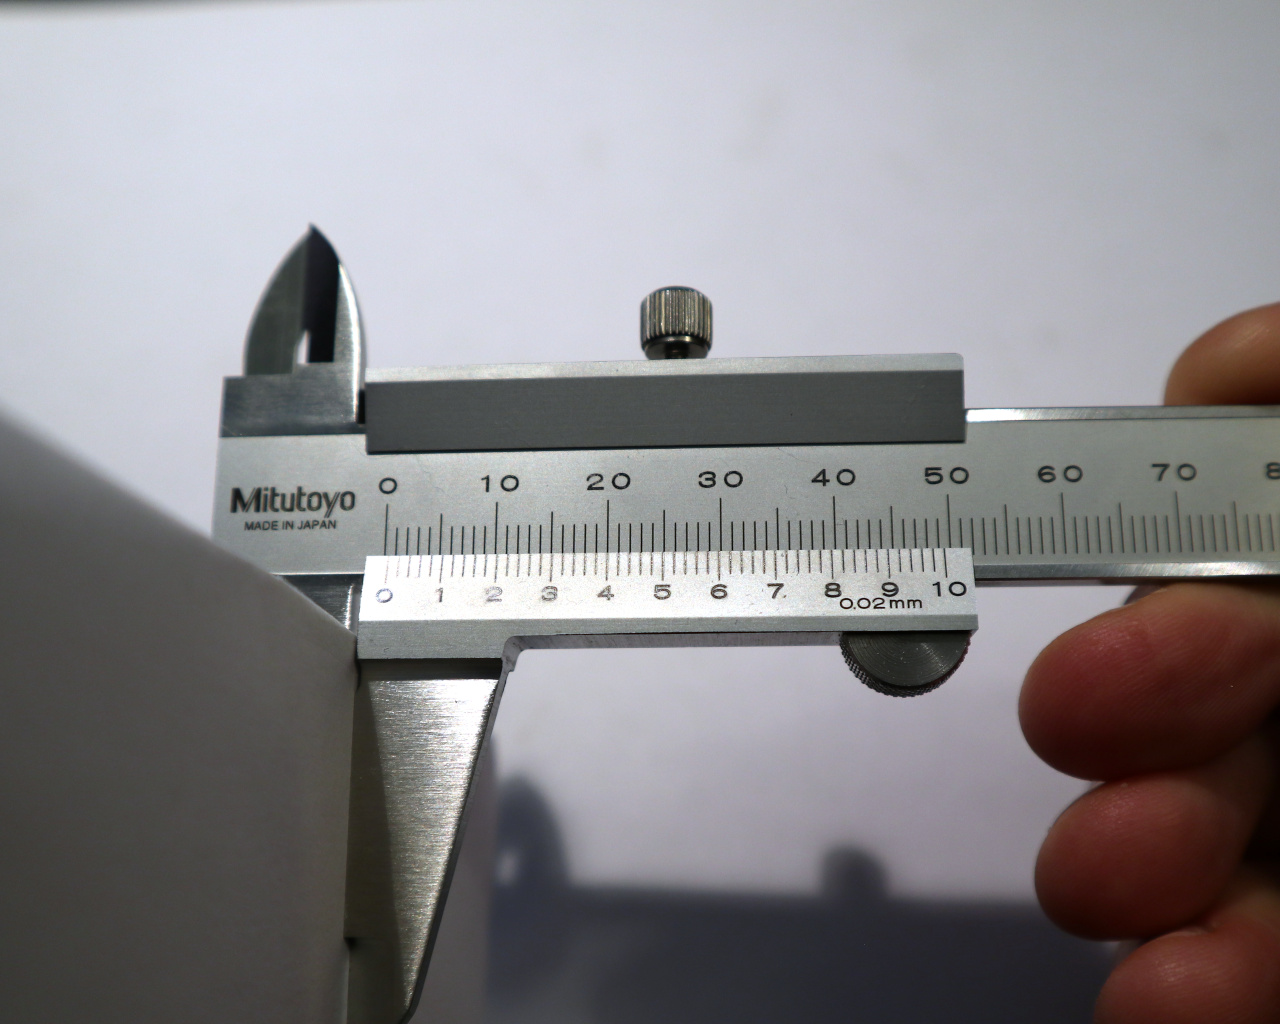 Measuring Tools 0-150mm Micrometer Gauge Vernier Caliper Multifunction Ruler LD